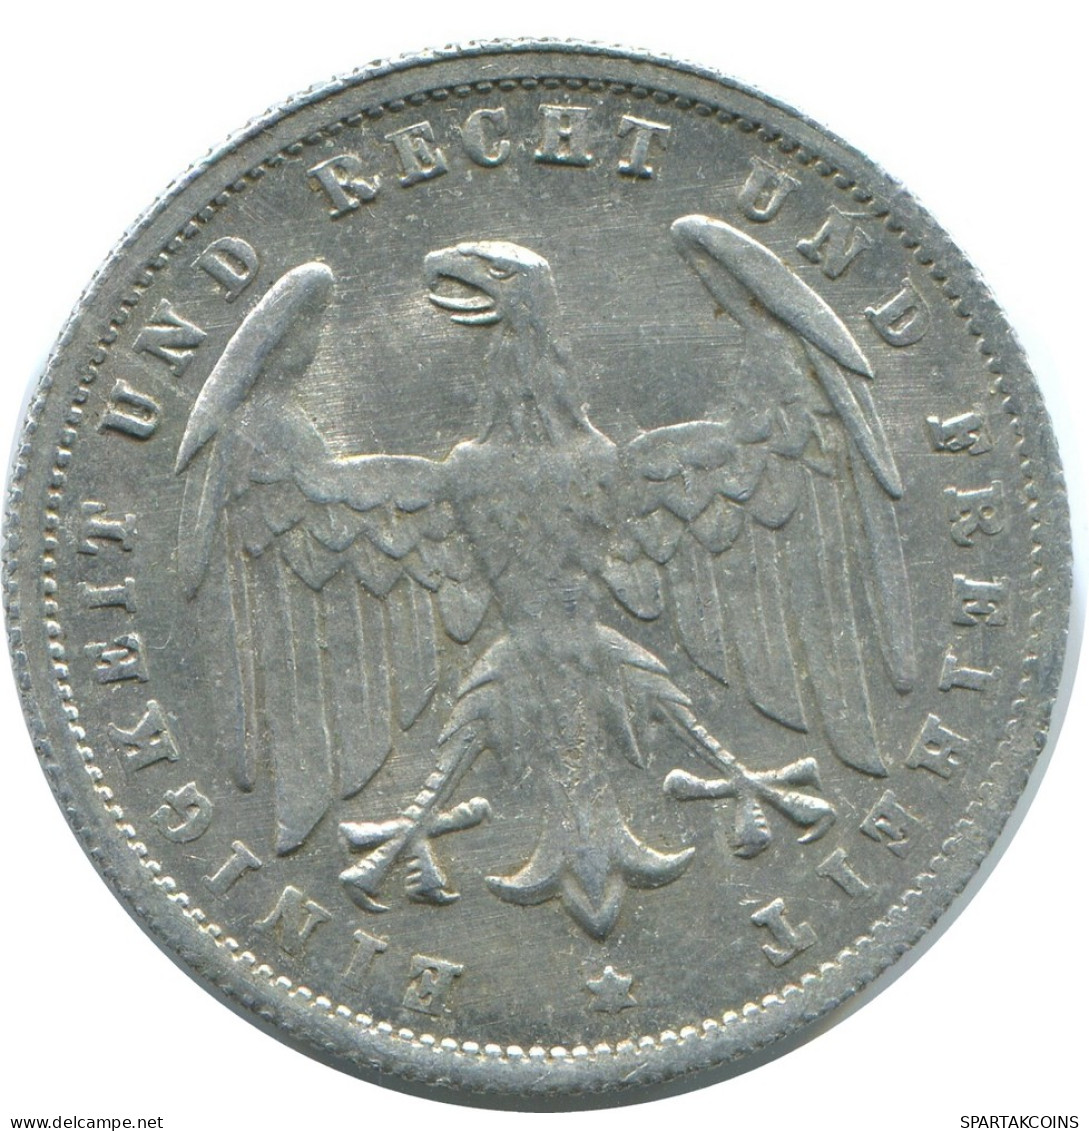 500 MARK 1923 F GERMANY Coin #AE436.U - 200 & 500 Mark